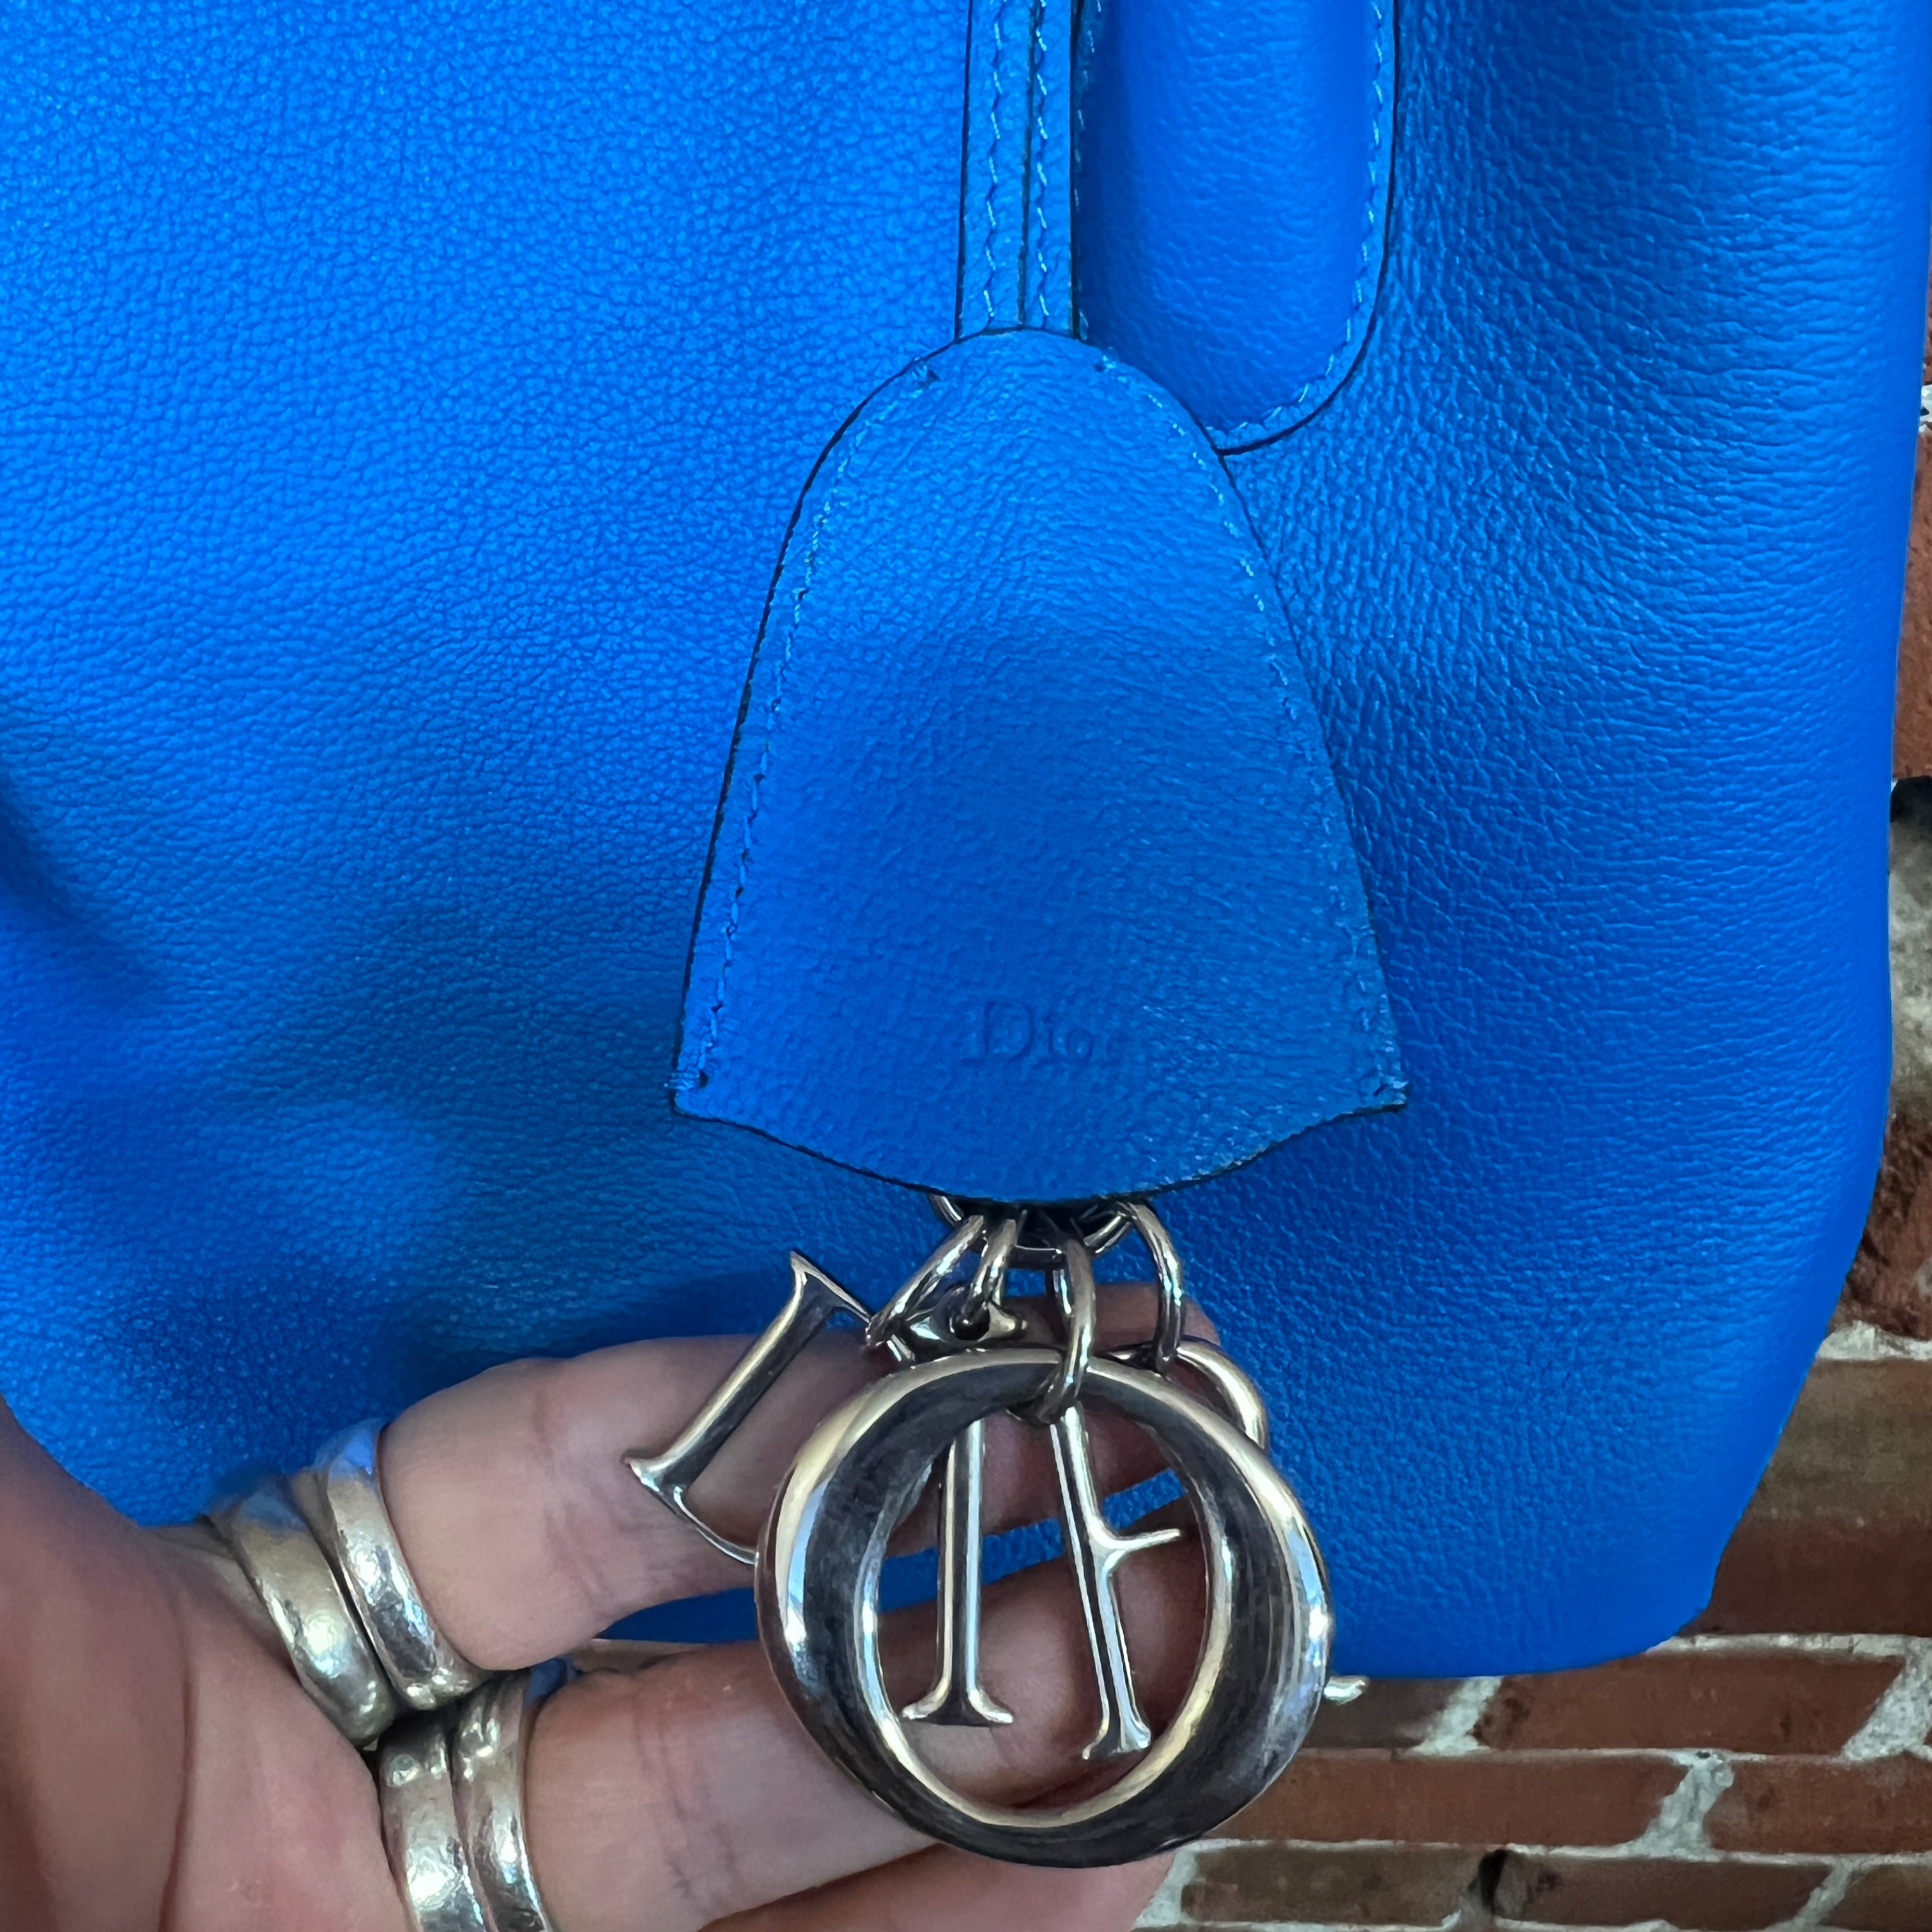 CHRISTIAN DIOR "Miss Dior" handbag